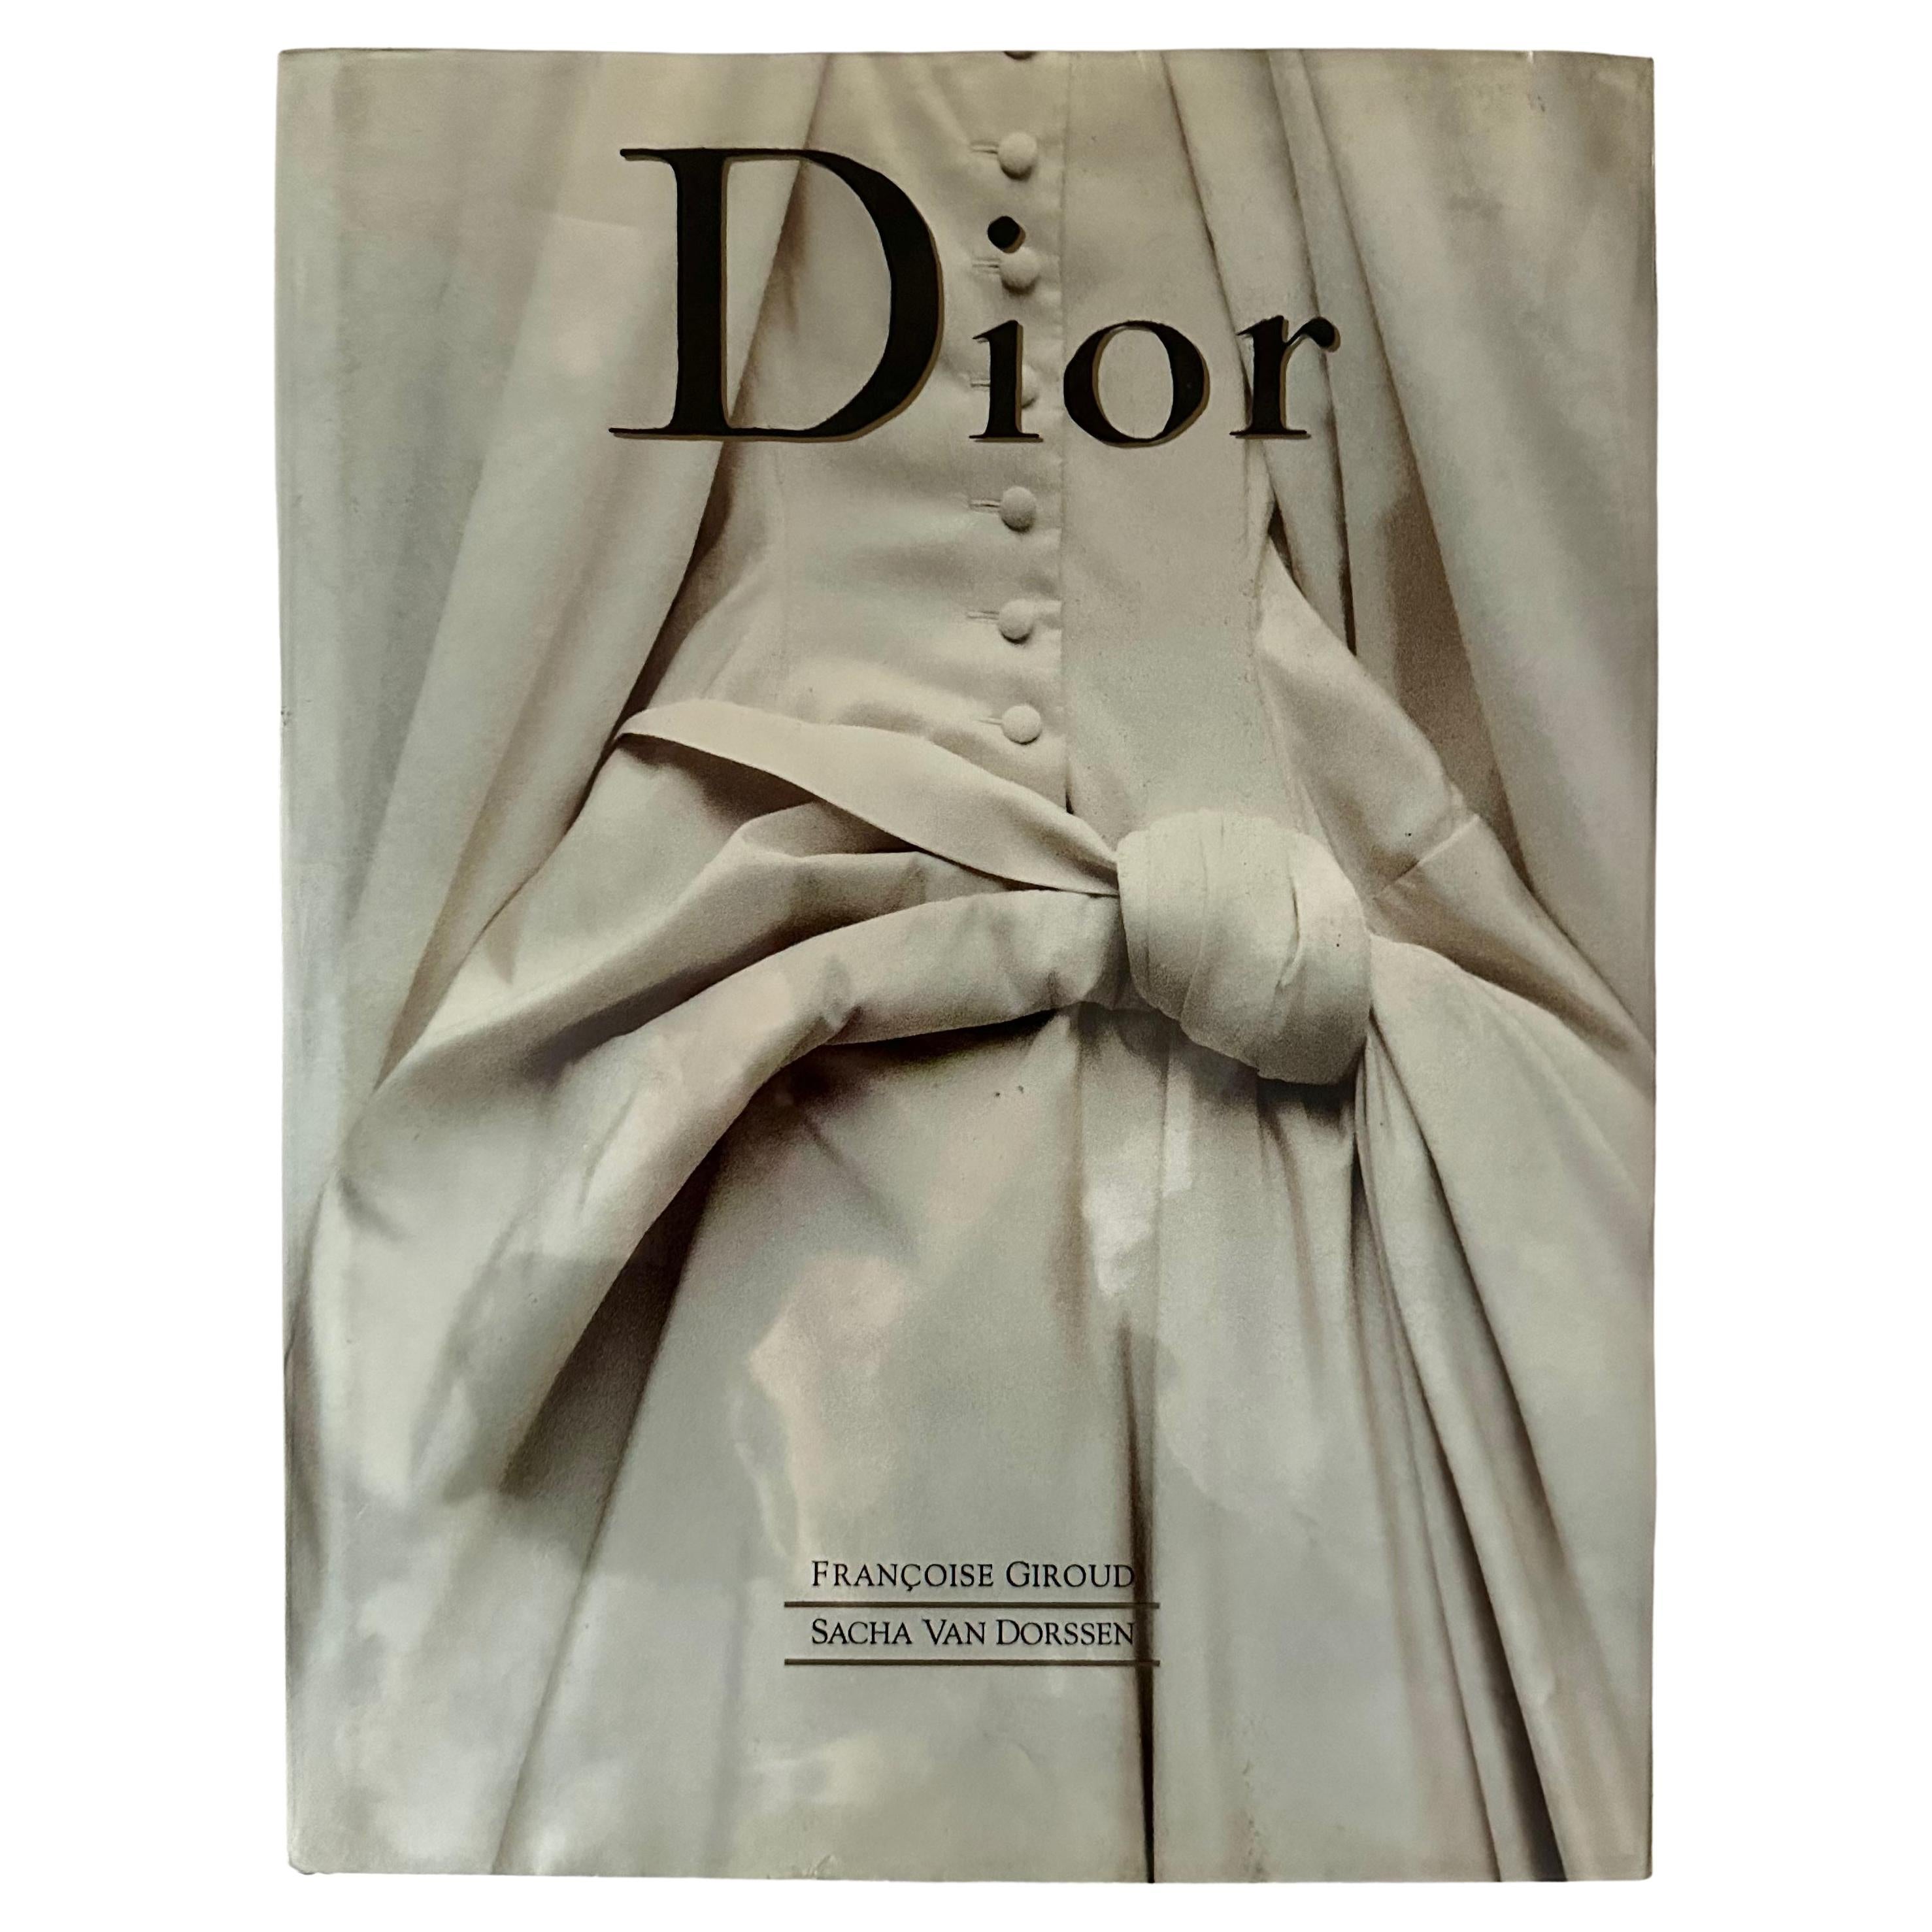 Dior - Françoise Giroud - 1ère édition américaine,  New York, 1987 en vente